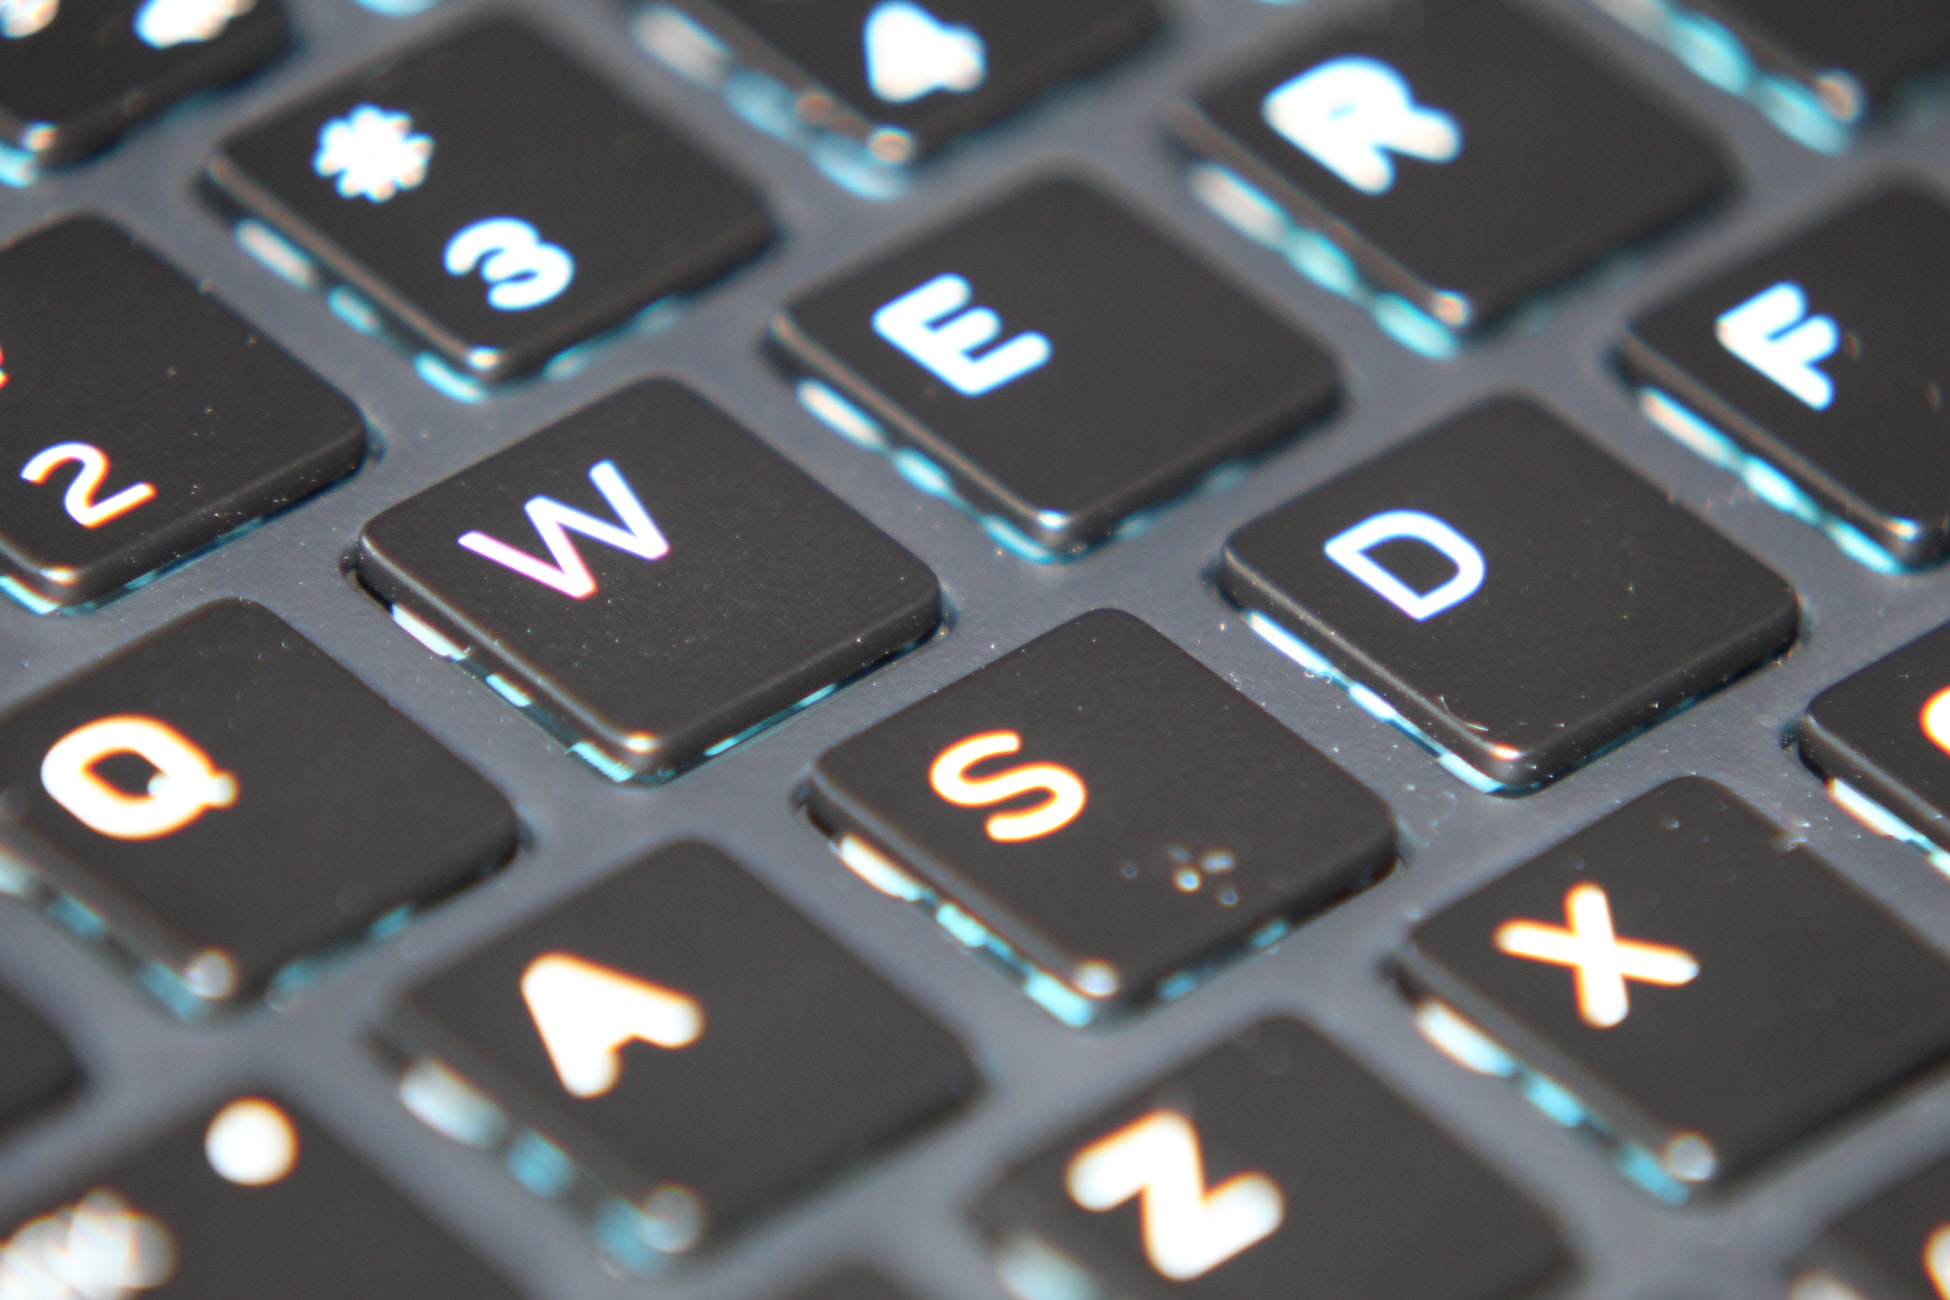 Close up of keys open a keyboard